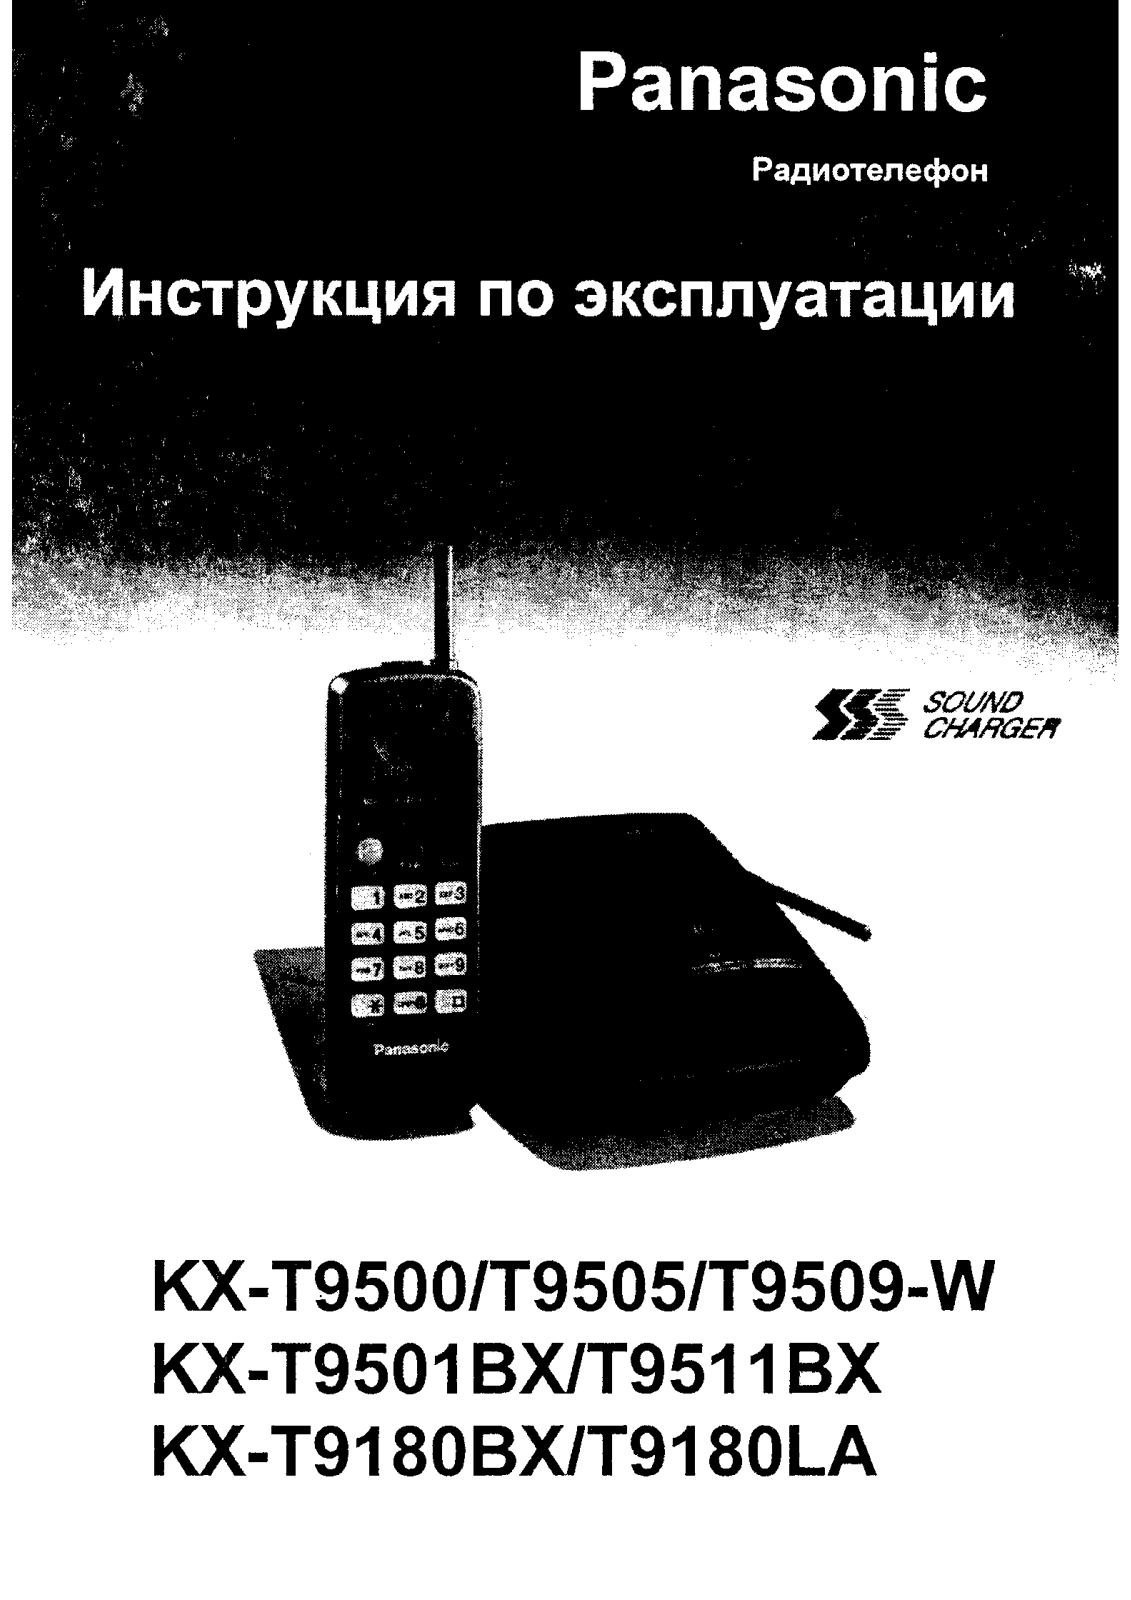 Panasonic KX-T9509 User Manual